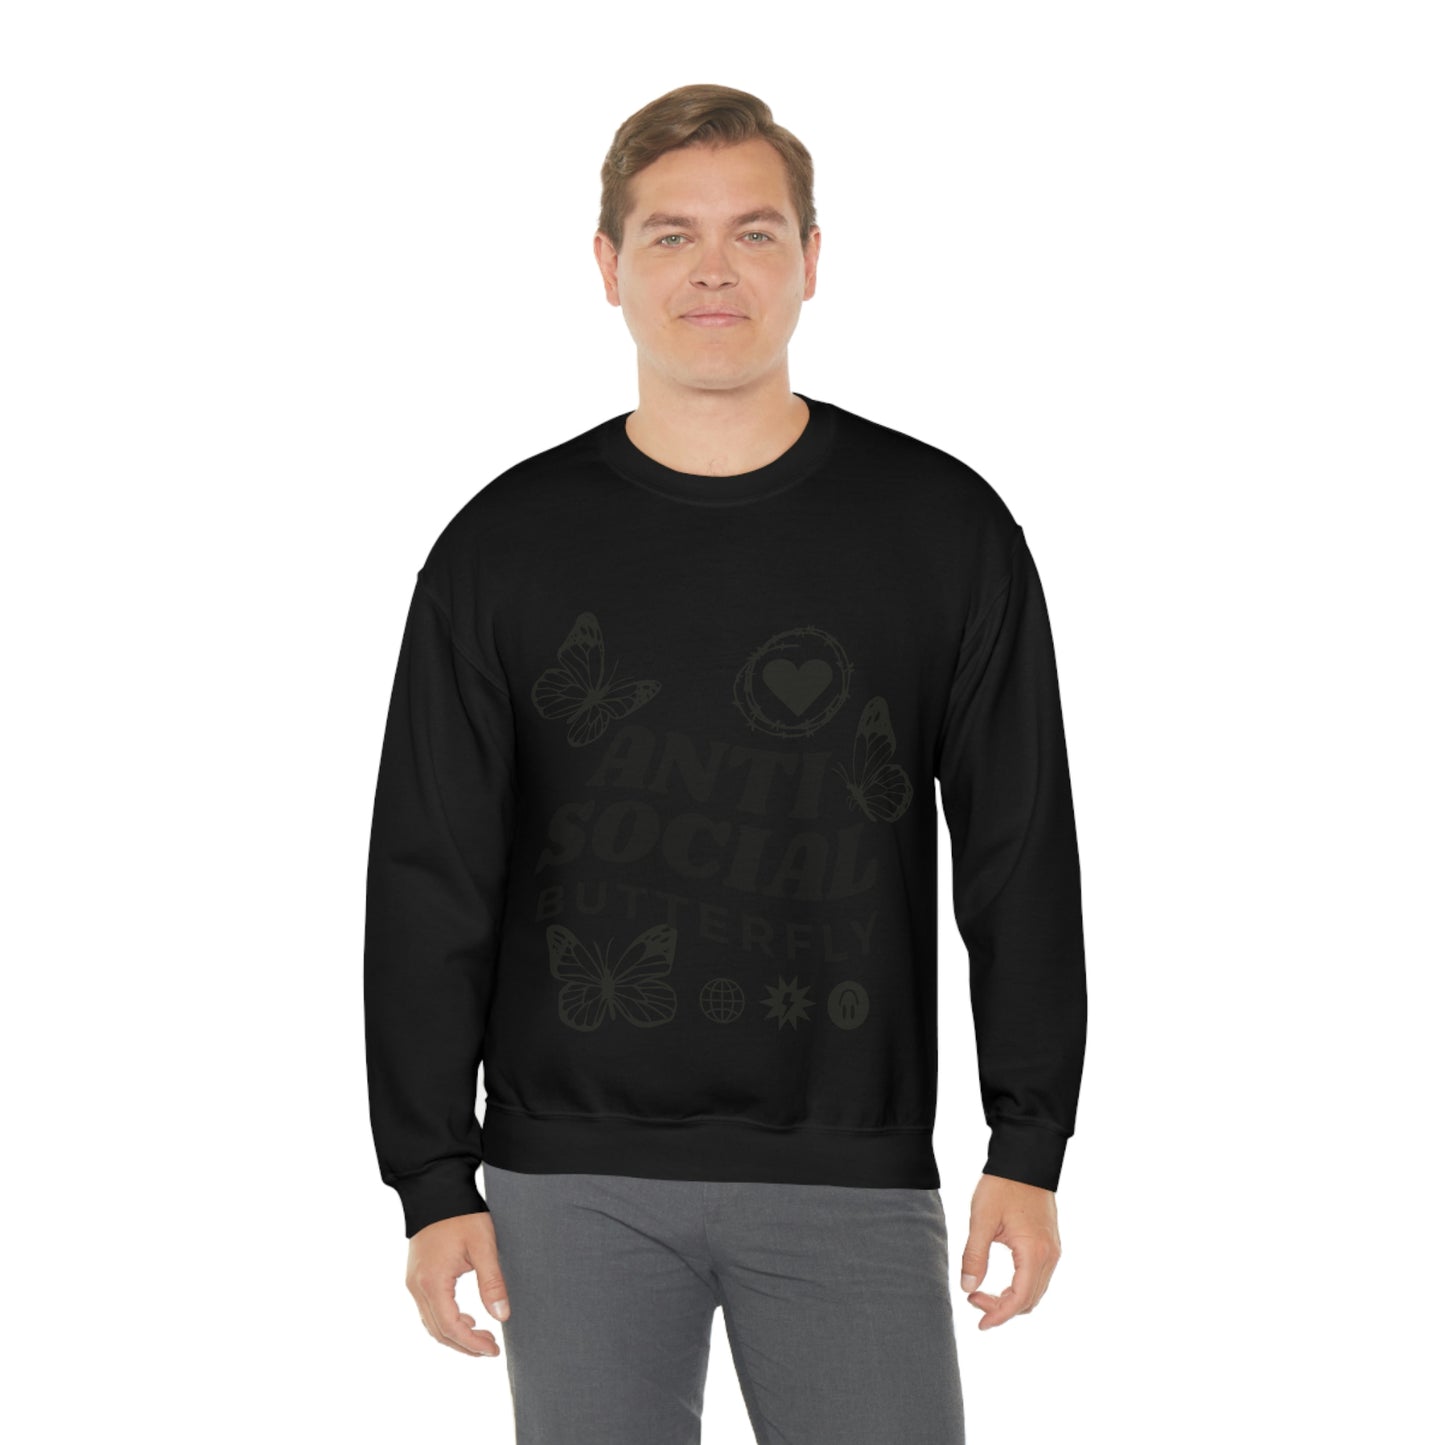 Anti Social Butterfly, Goth Aesthetic Sweatshirt